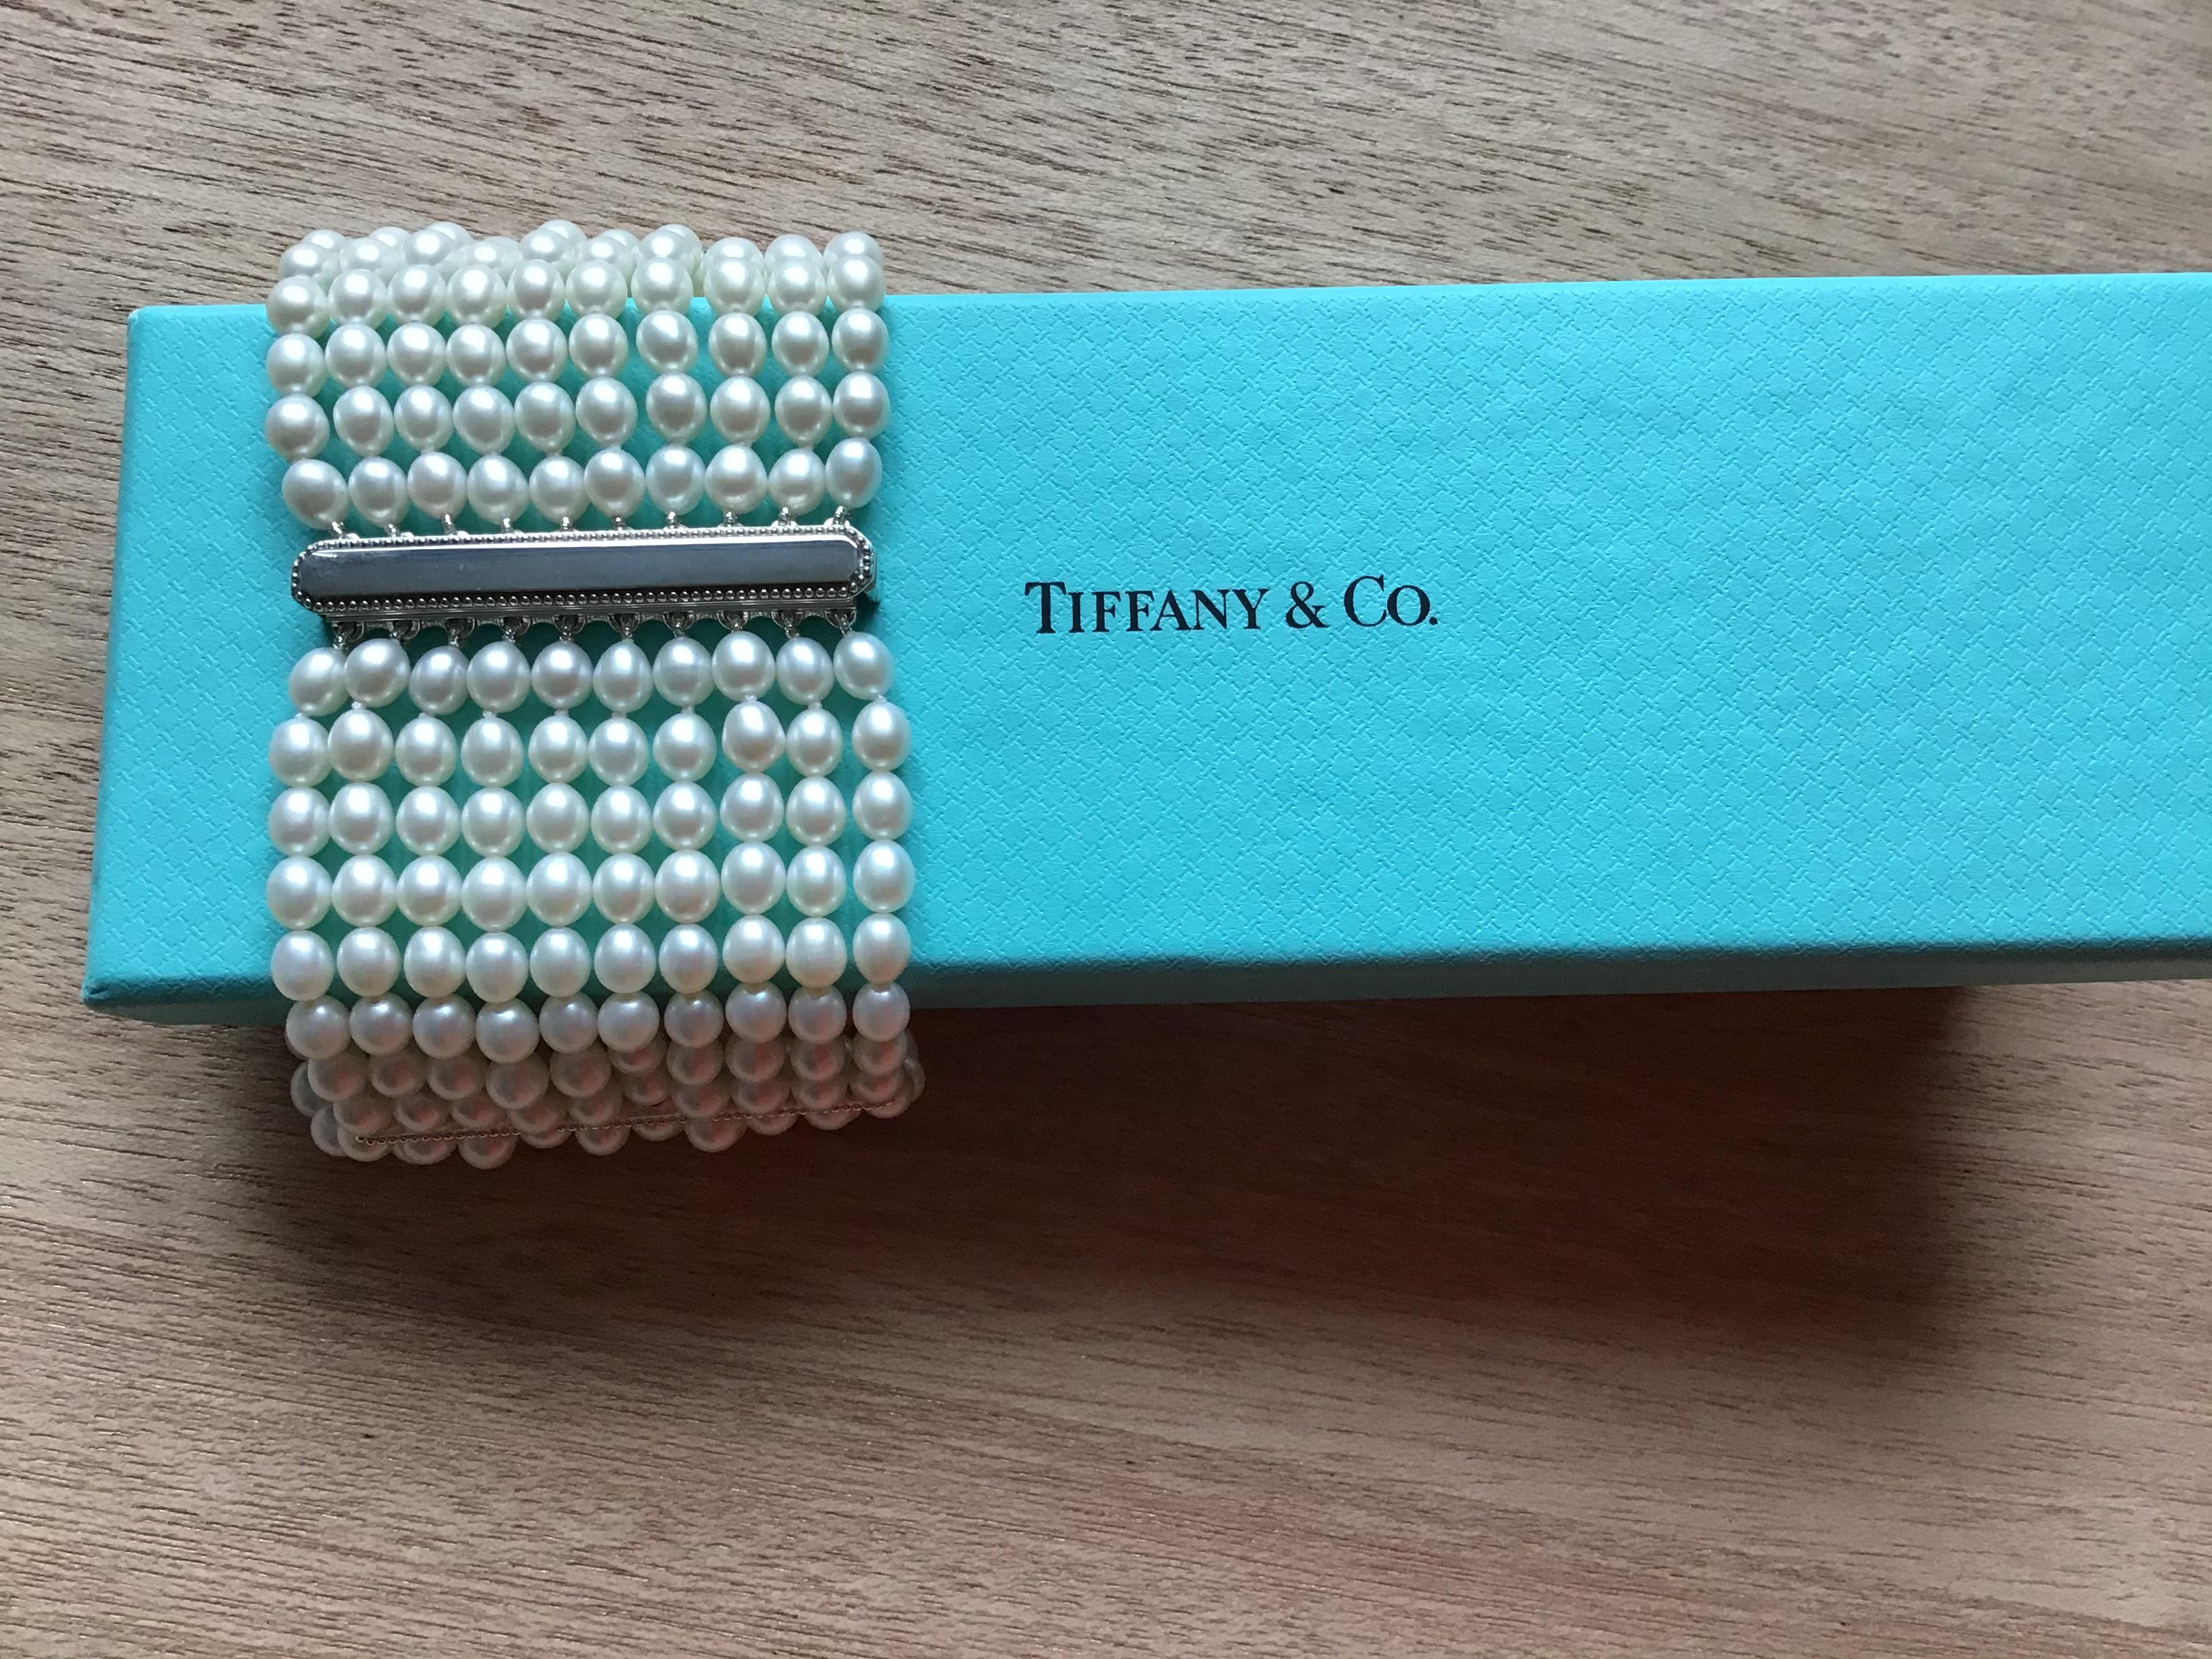 American Tiffany & Co. Ziegfeld 10-Row Cultured Freshwater Pearl Sterling Silver Bracelet